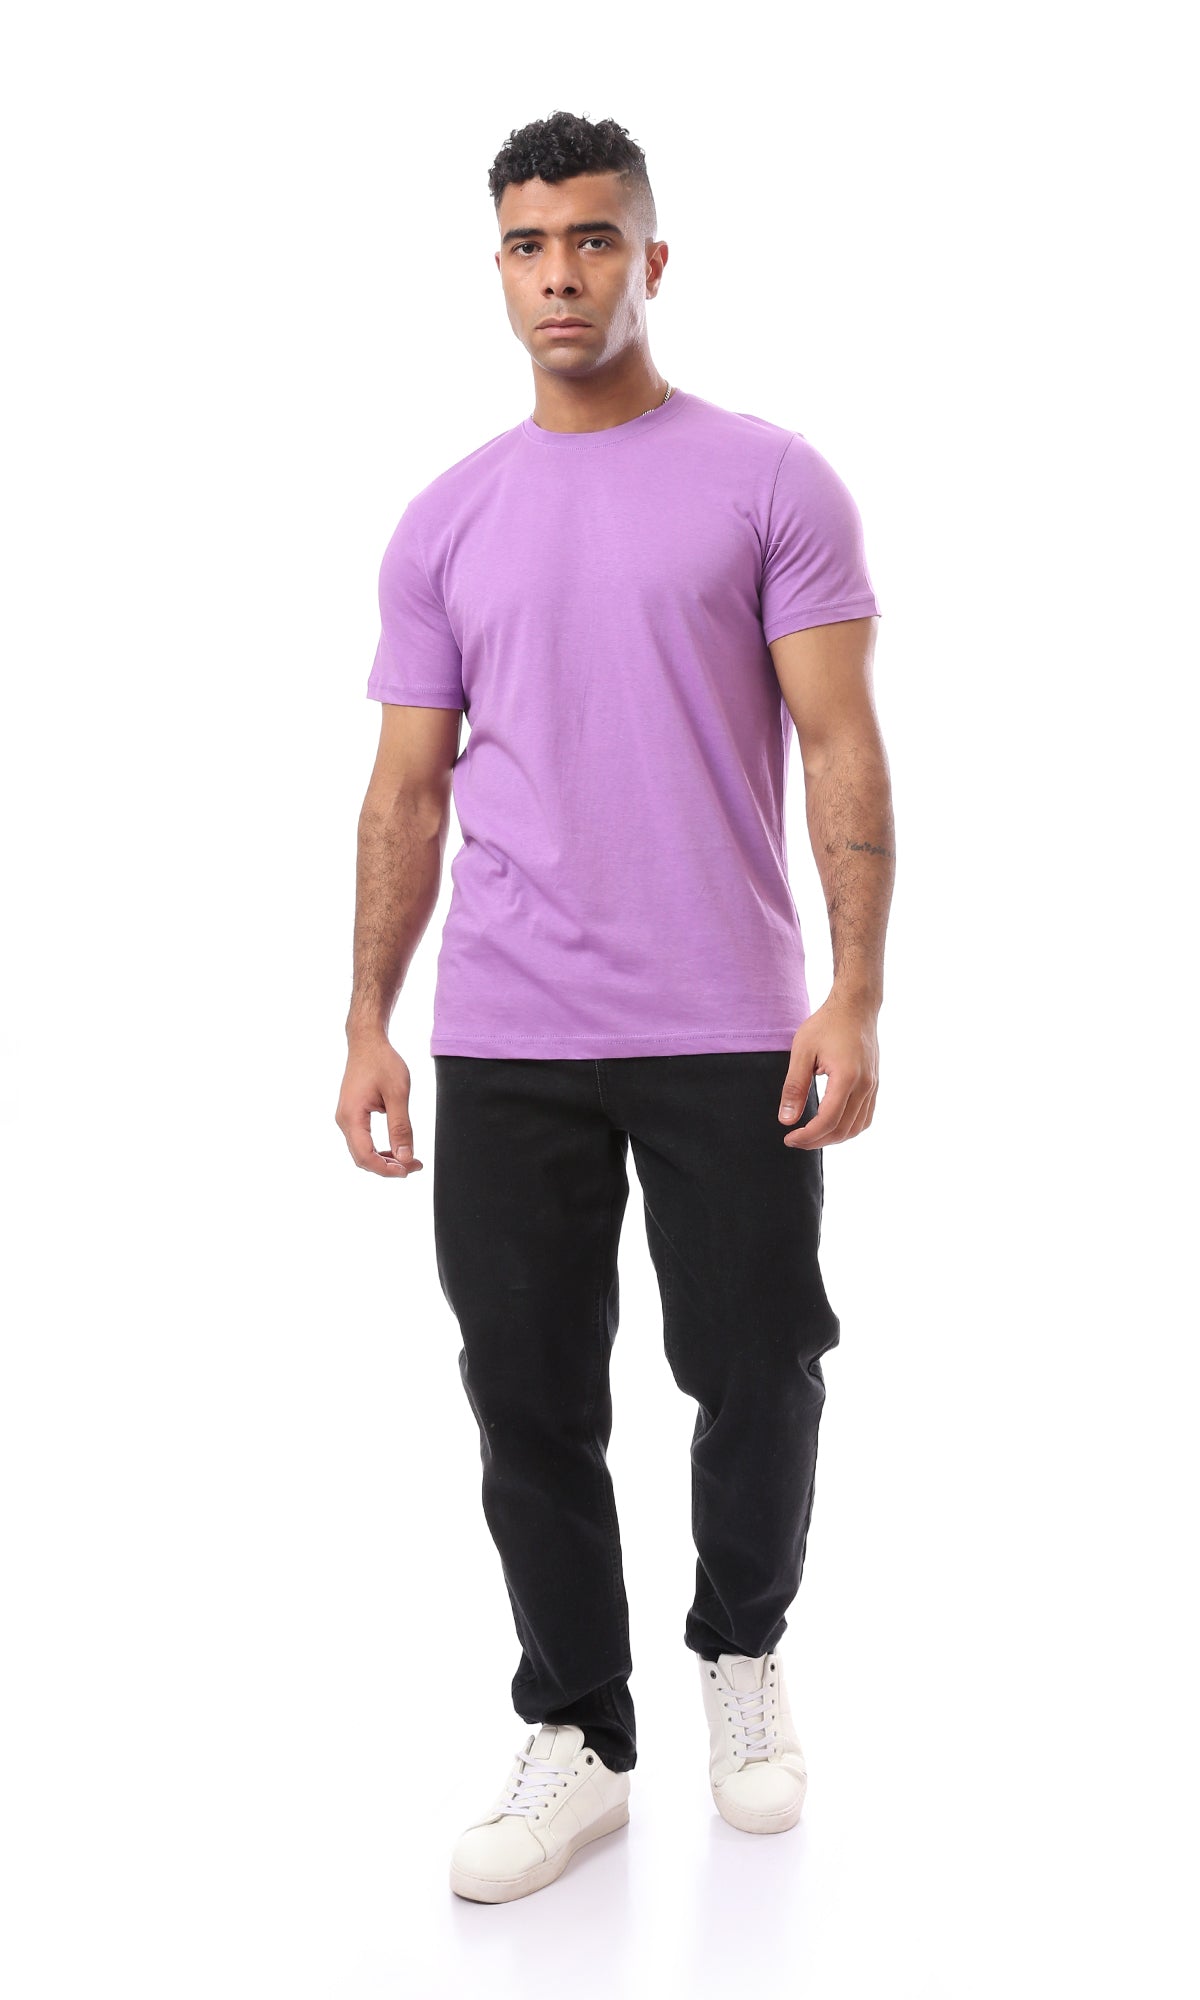 O164595 Heather Light Purple Short Sleeves Basic T-Shirt